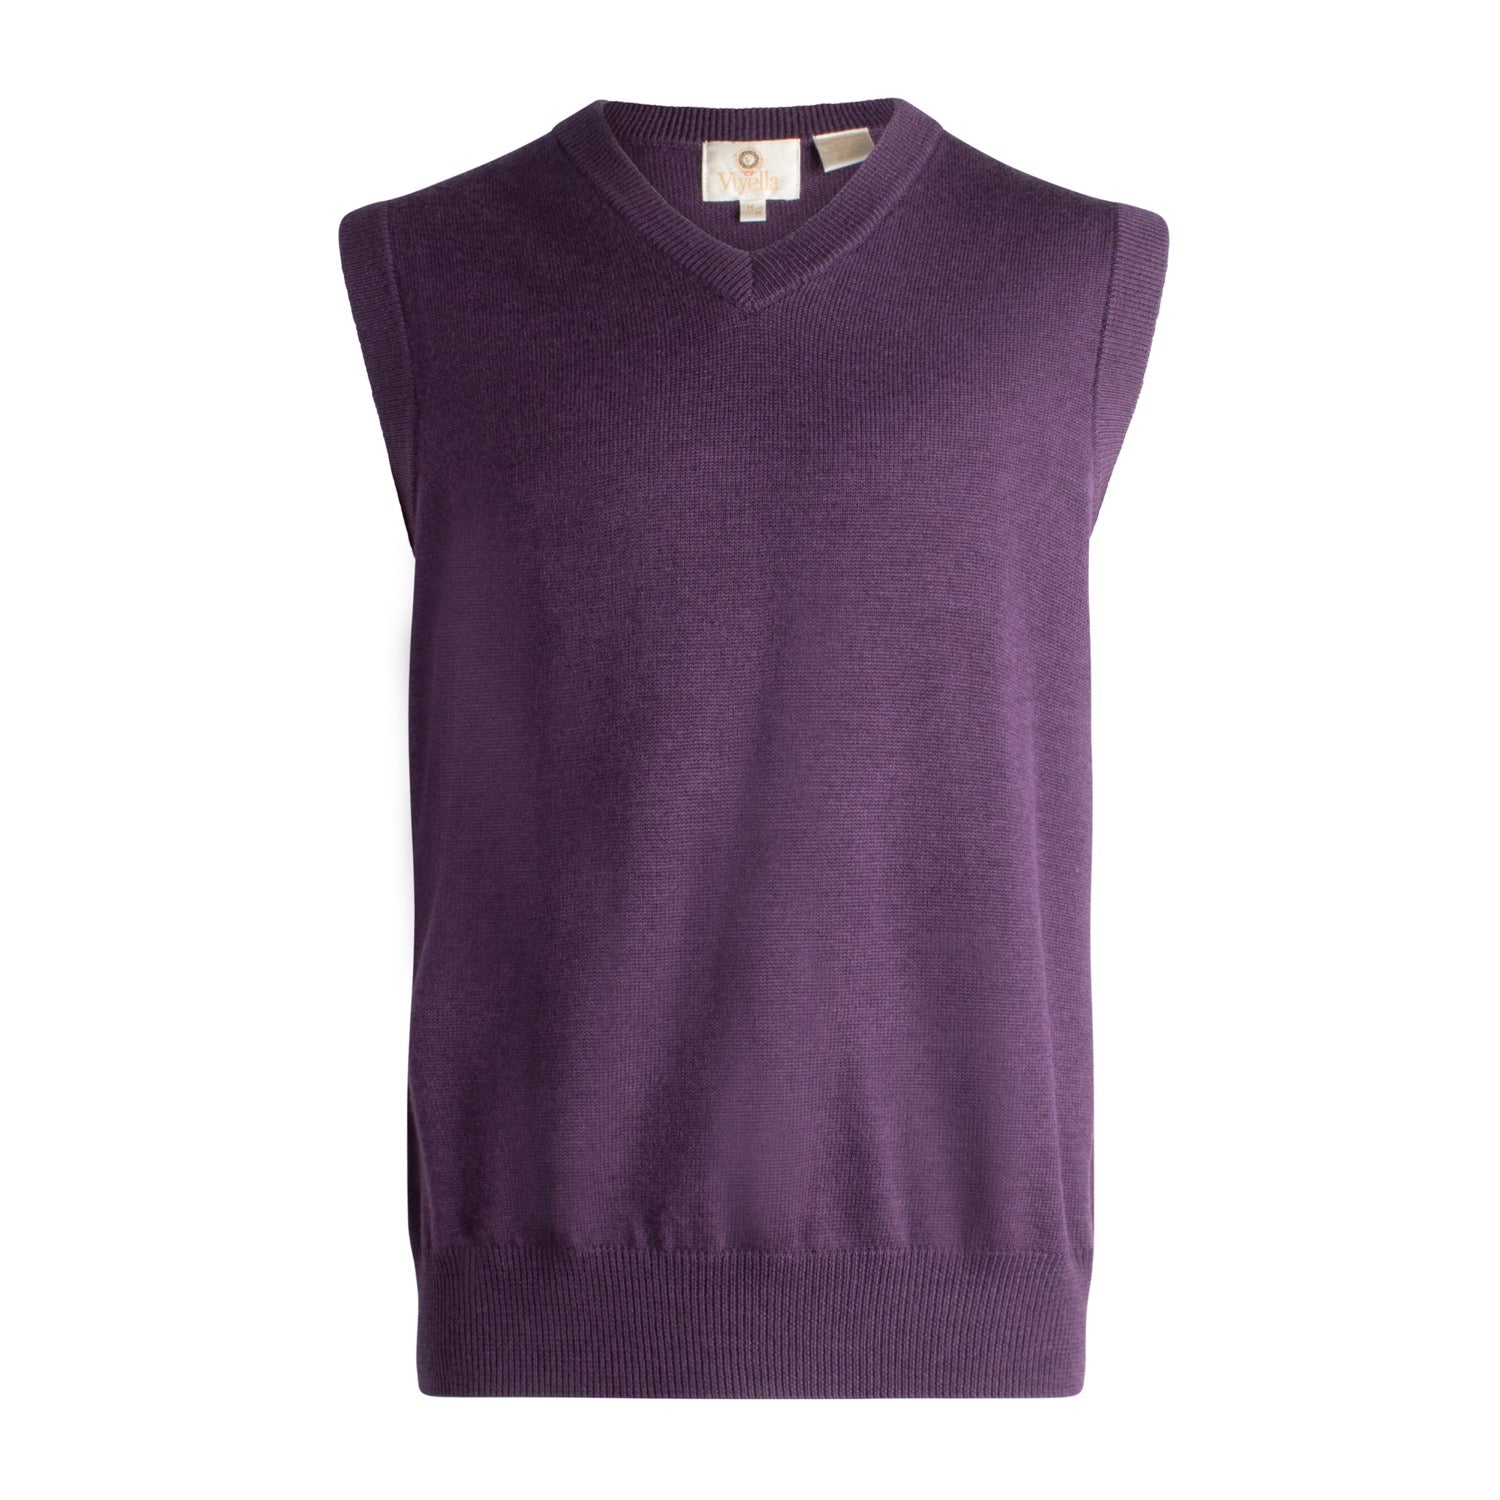 Extra Fine 'Zegna Baruffa' Merino Wool V-Neck Sleeveless Sweater Vest in Mulberry by Viyella